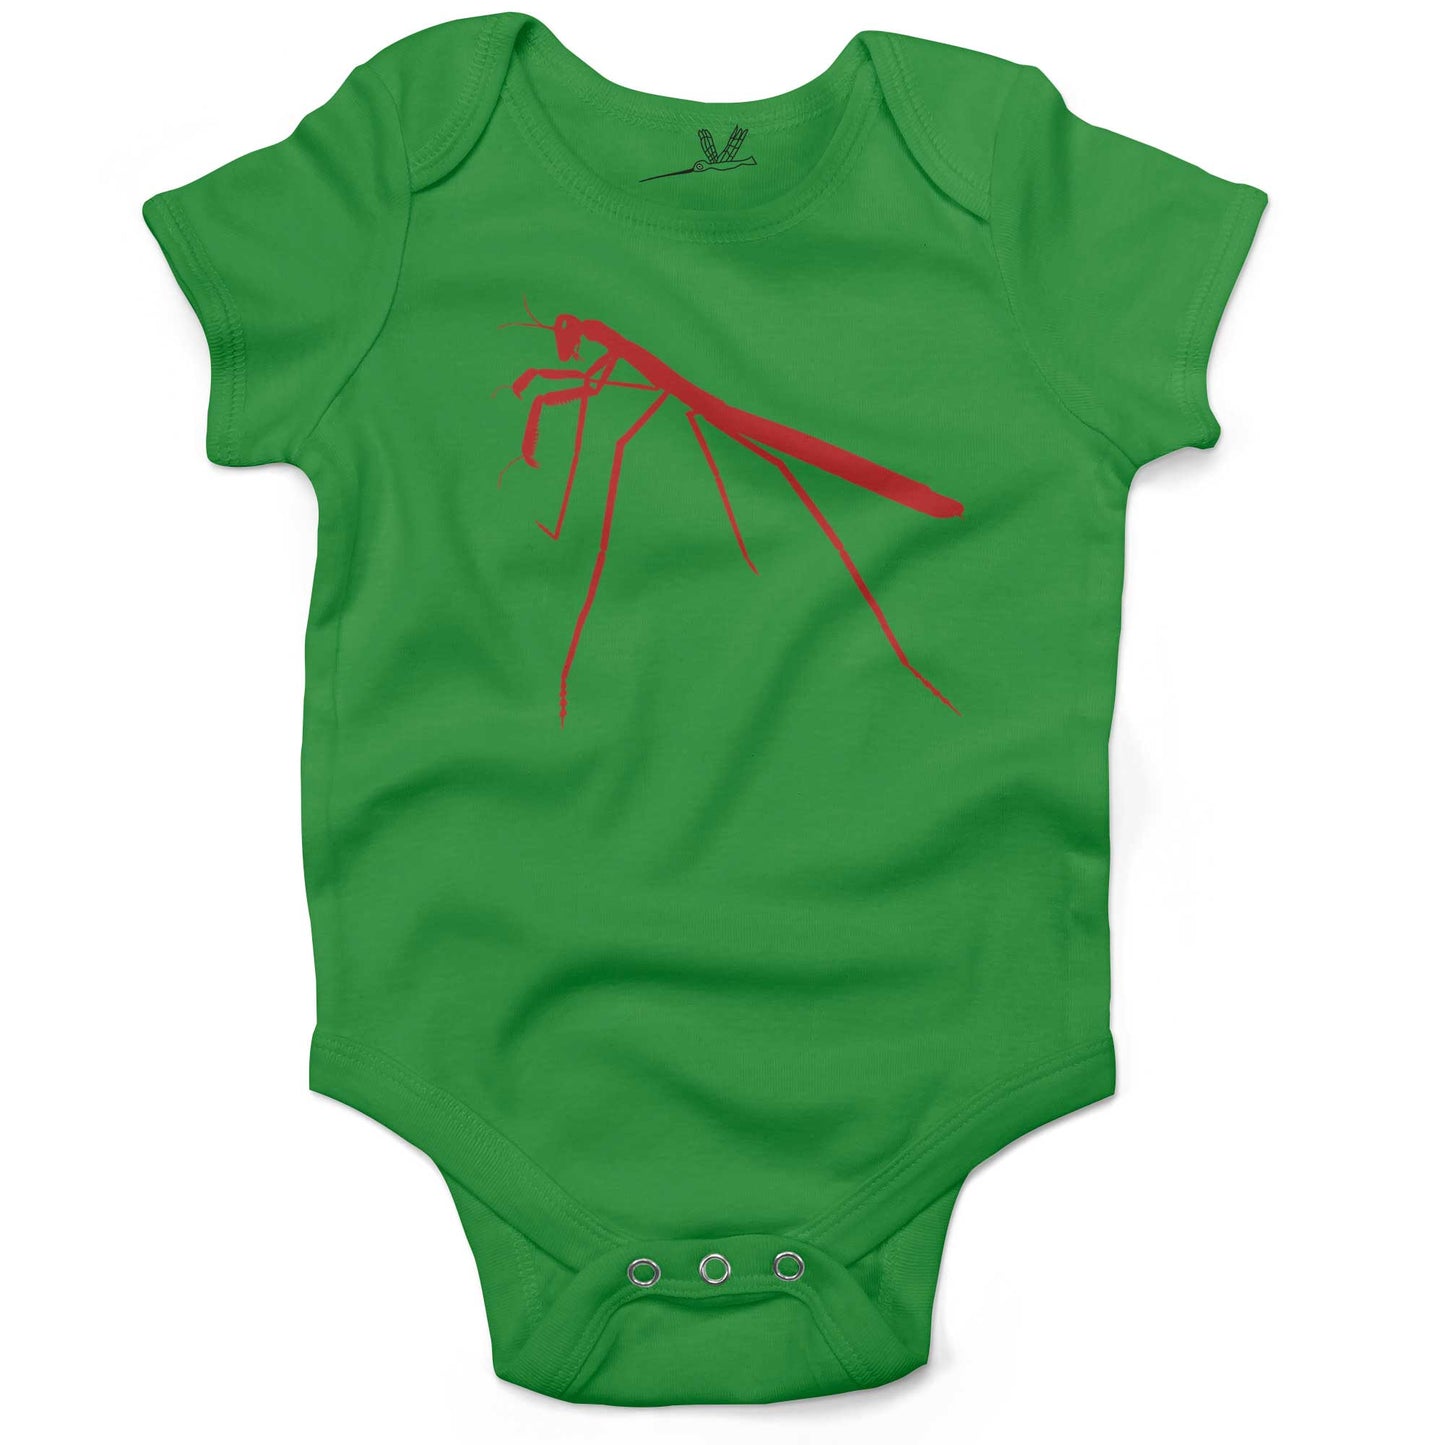 Praying Mantis Infant Bodysuit-Grass Green-3-6 months